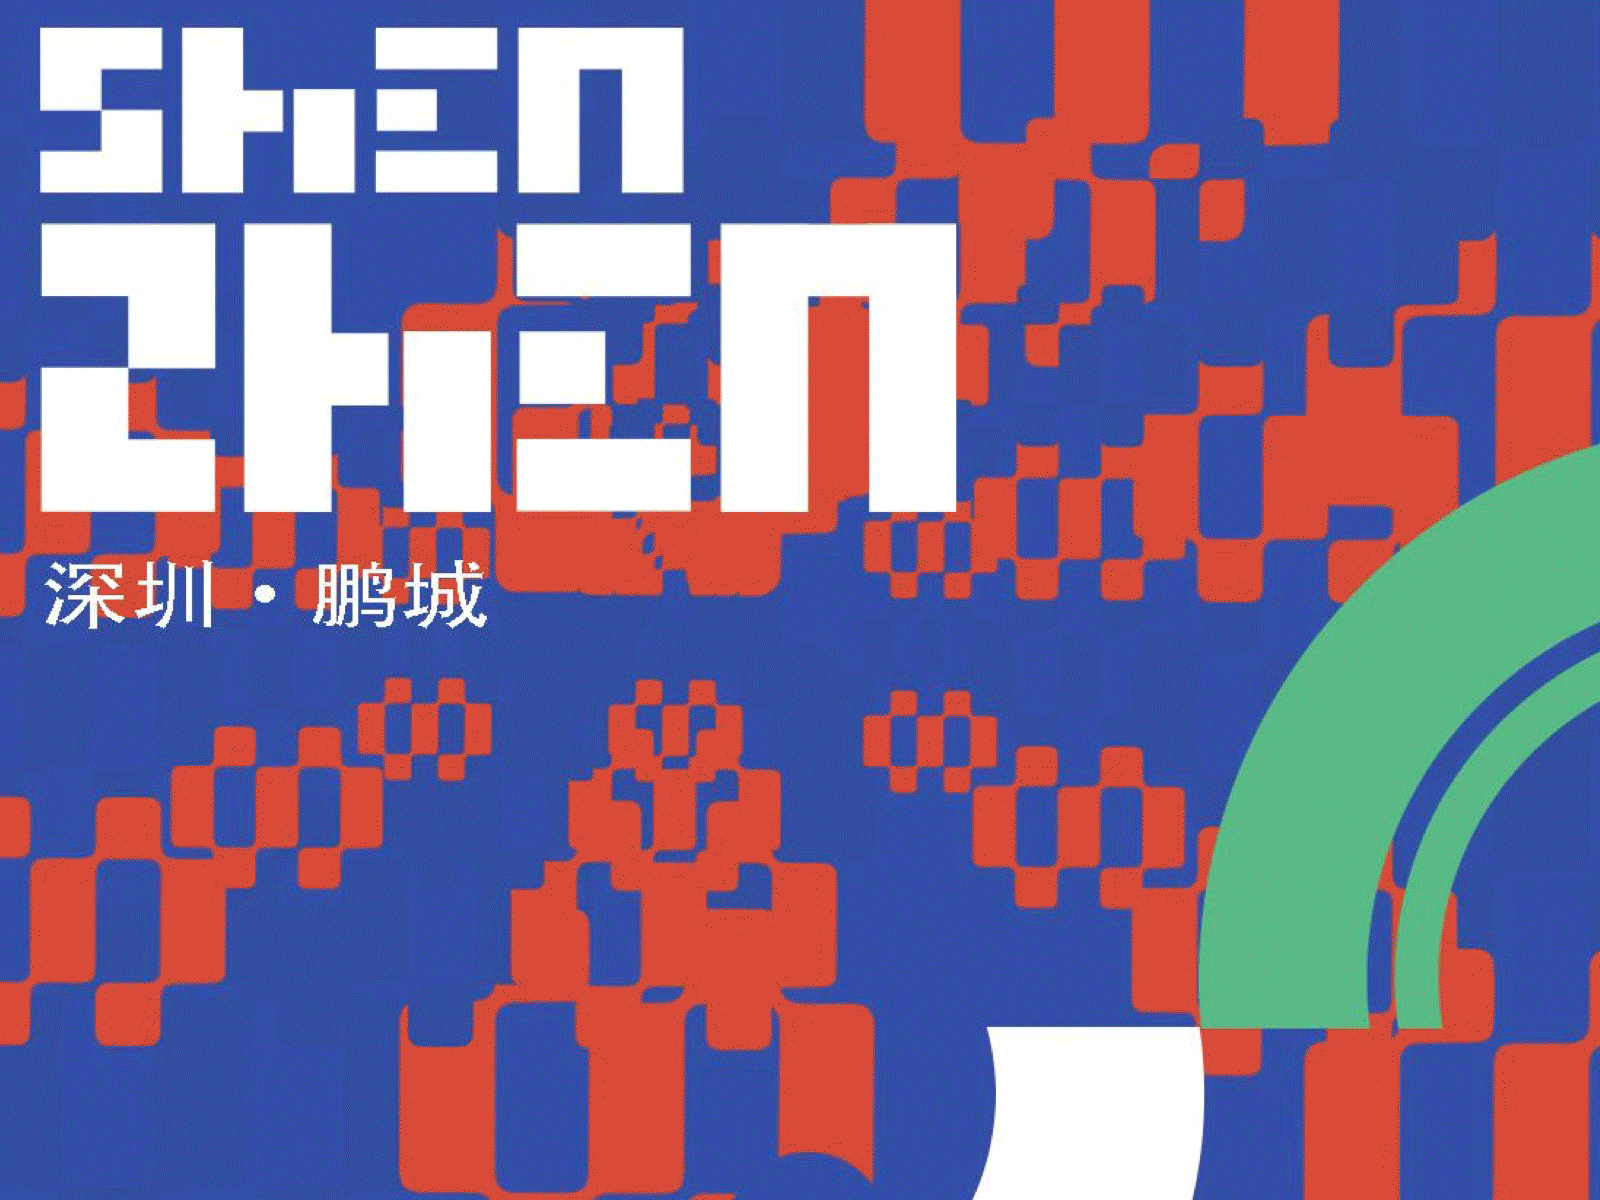 Shenzhen city image design branding